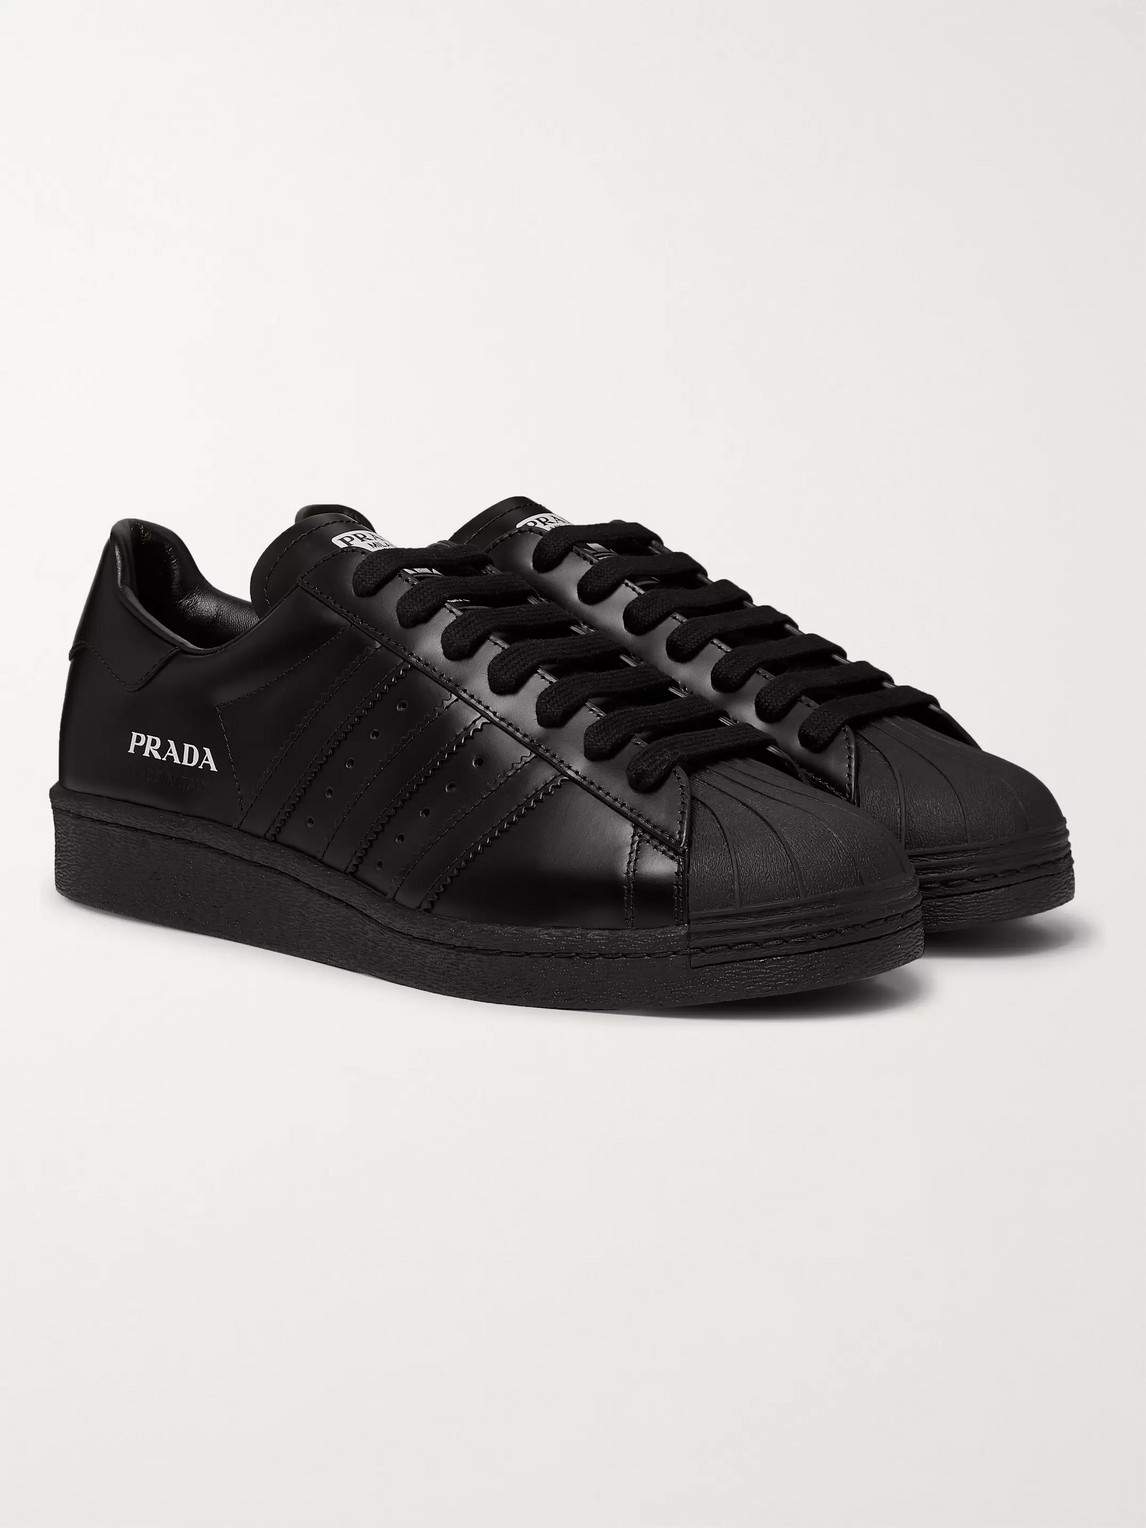 Adidas Consortium Prada Superstar 450 Leather Sneakers In Black